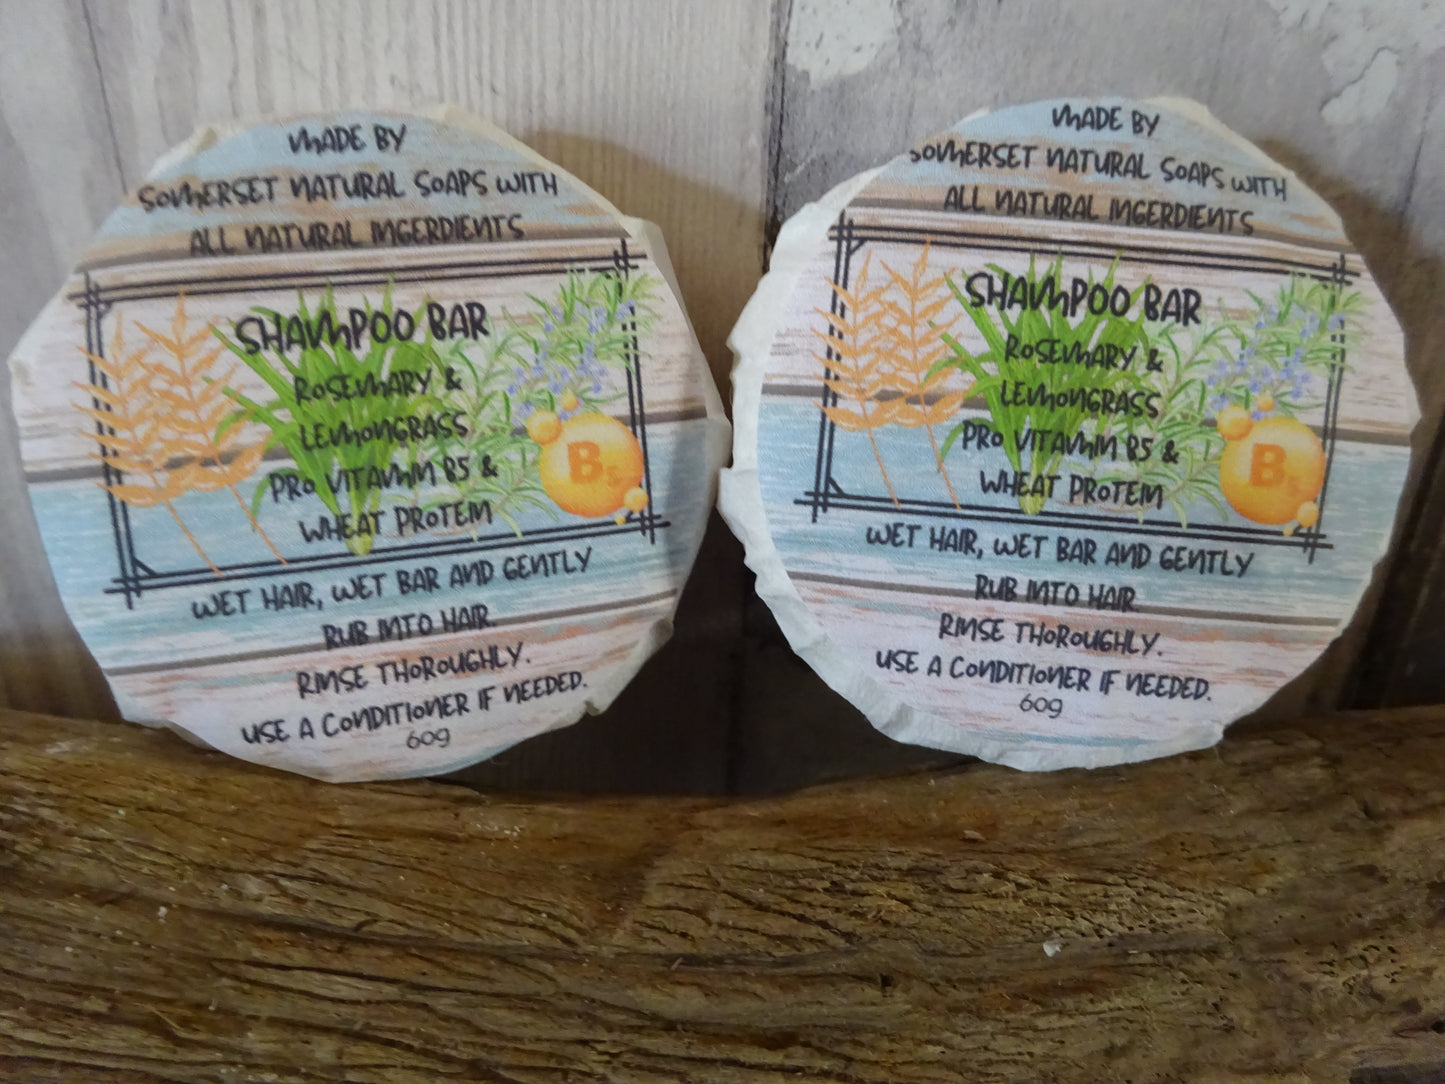 Rosemary & Lemongrass Solid Shampoo